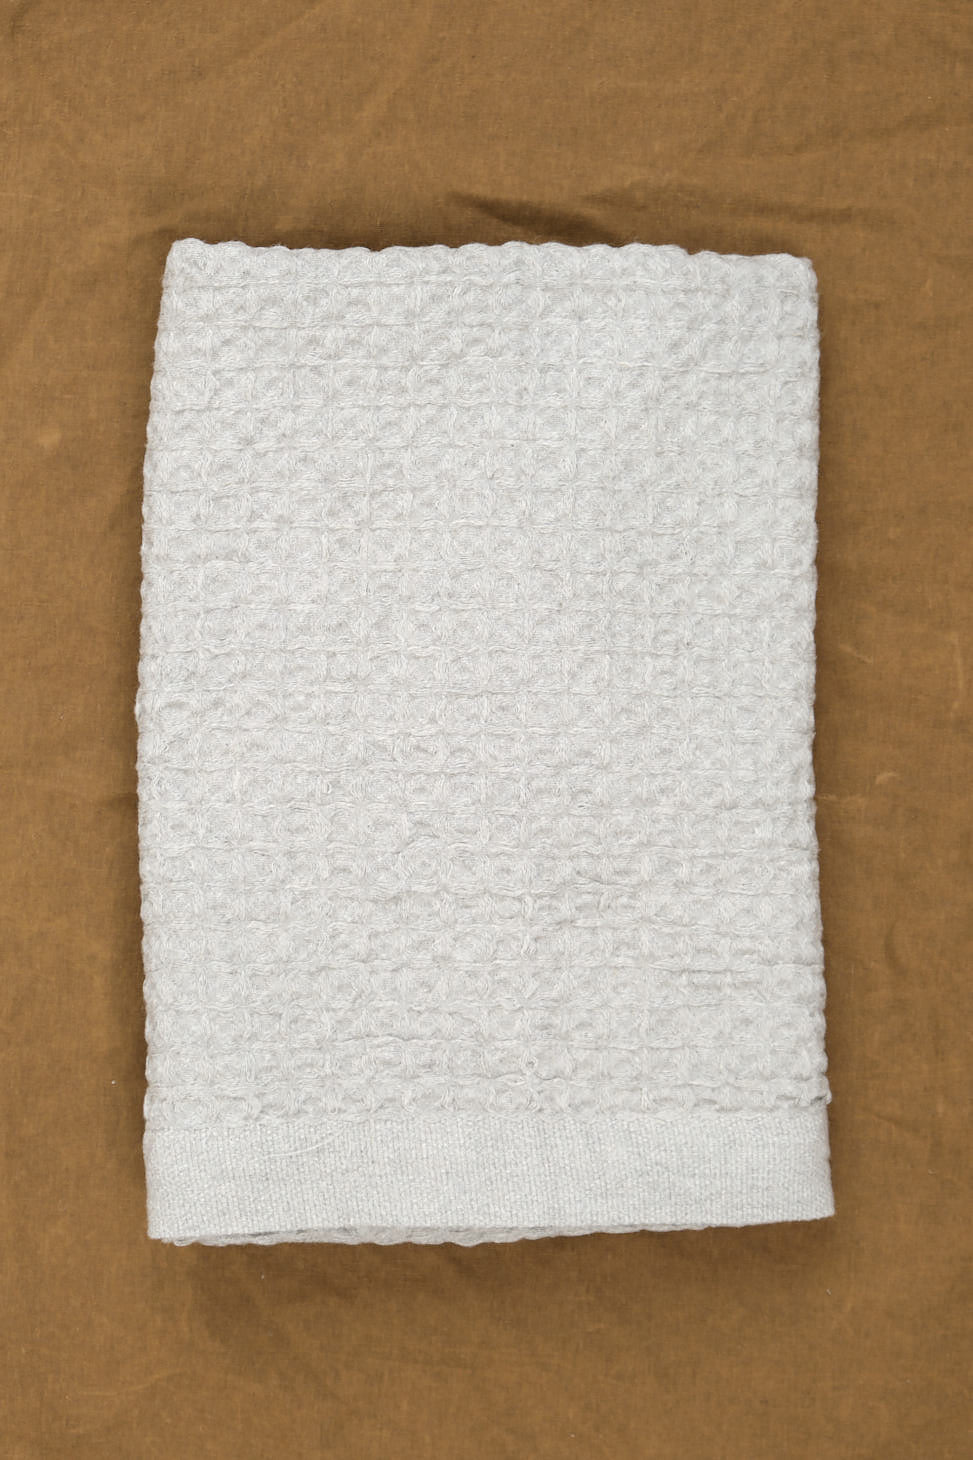 Lattice Cotton/Linen Bath Towel in Ice Grey folded